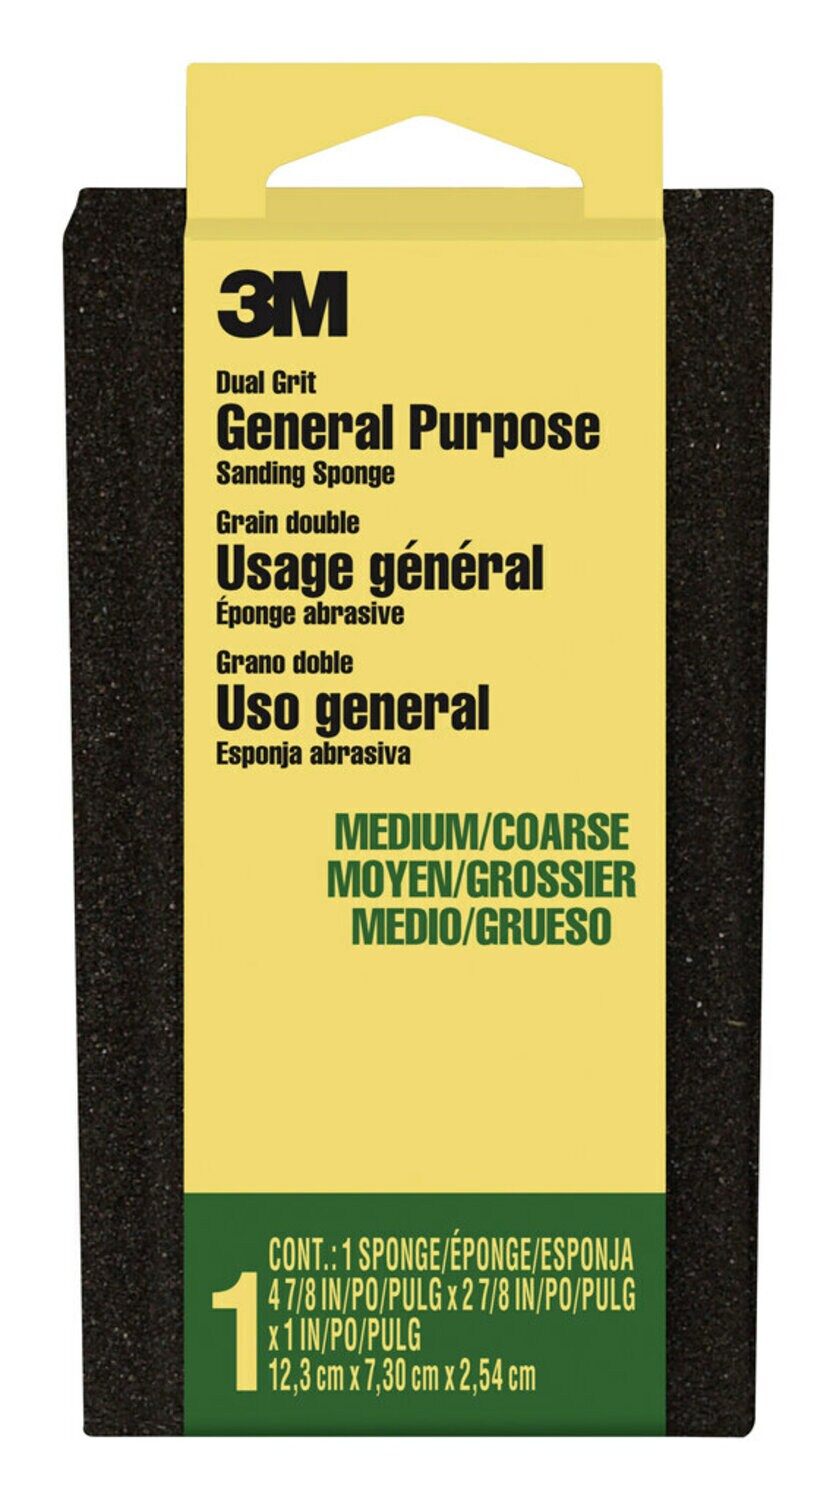 7100141259 - 3M General Purpose Sanding Sponge DSMC-ESF-10, 2 7/8 in x 4 7/8 in x 1 in, Dual Grit, Medium/Coarse, 10 ea/cs